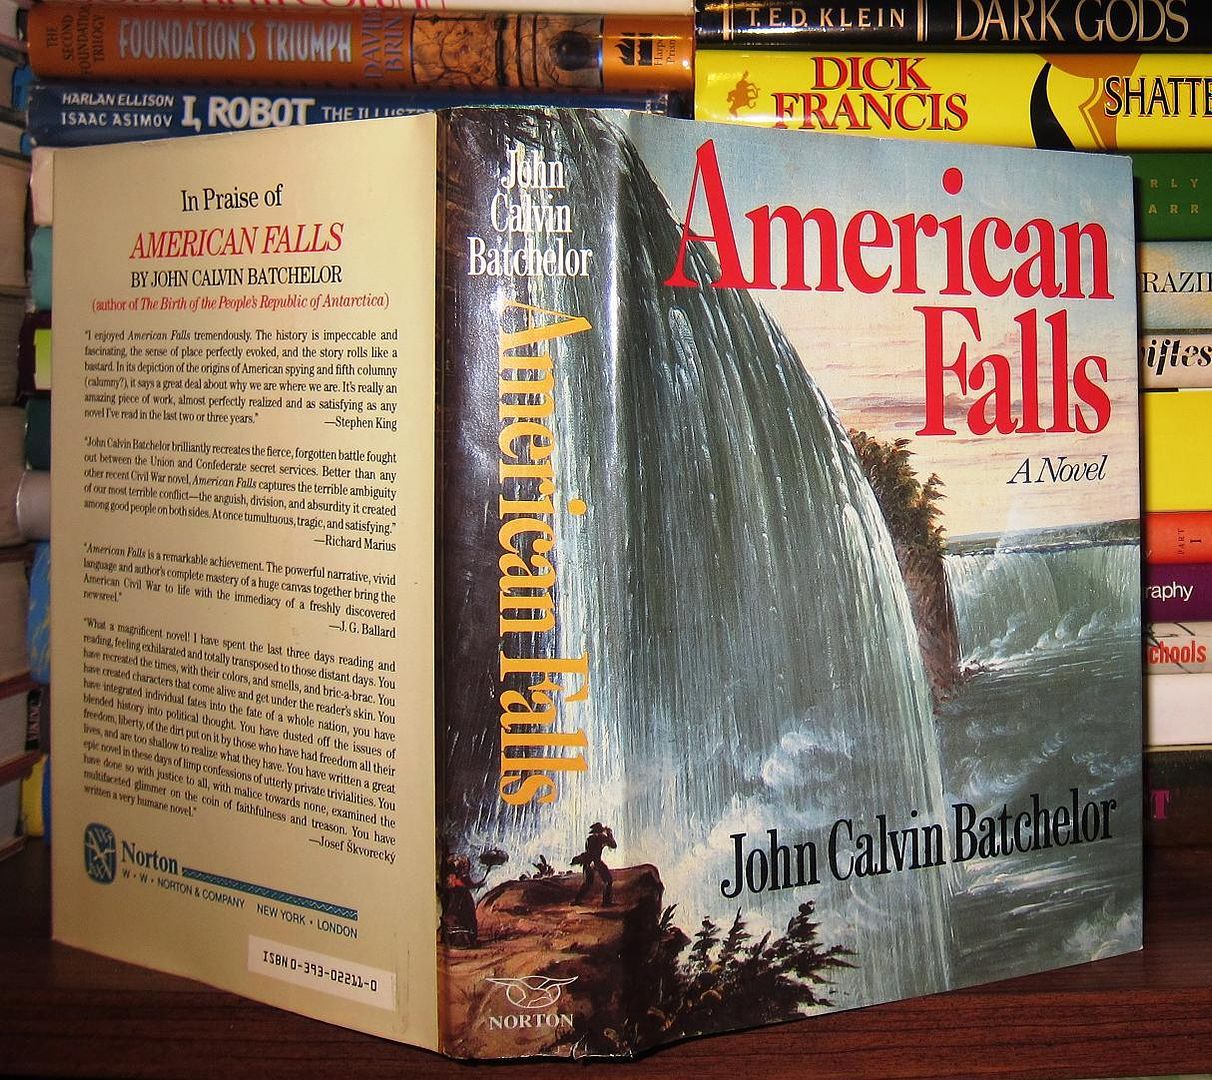 BATCHELOR, JOHN CALVIN - American Falls